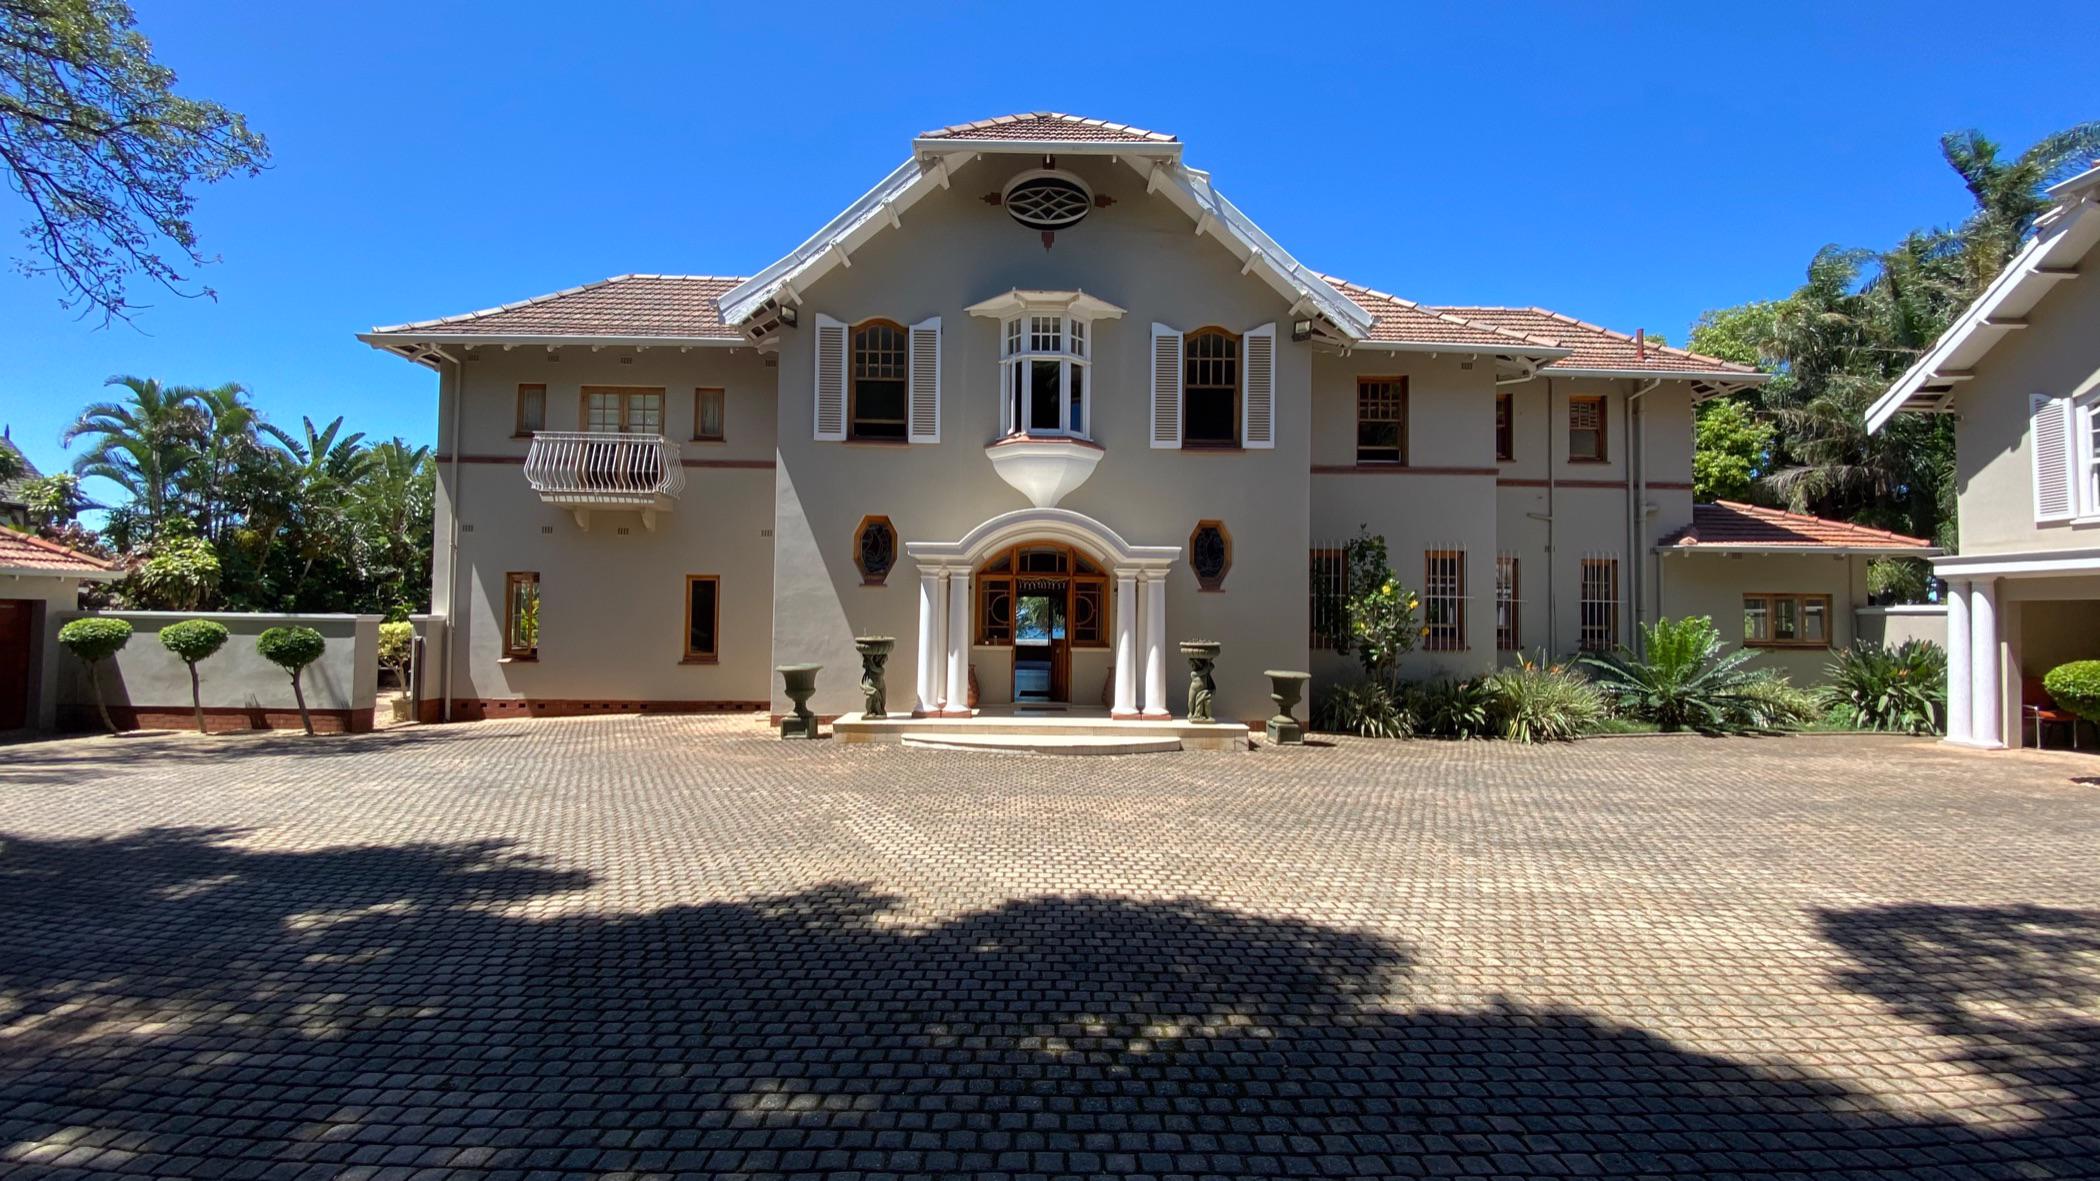 4 bedroom house for sale in Morningside (Durban)